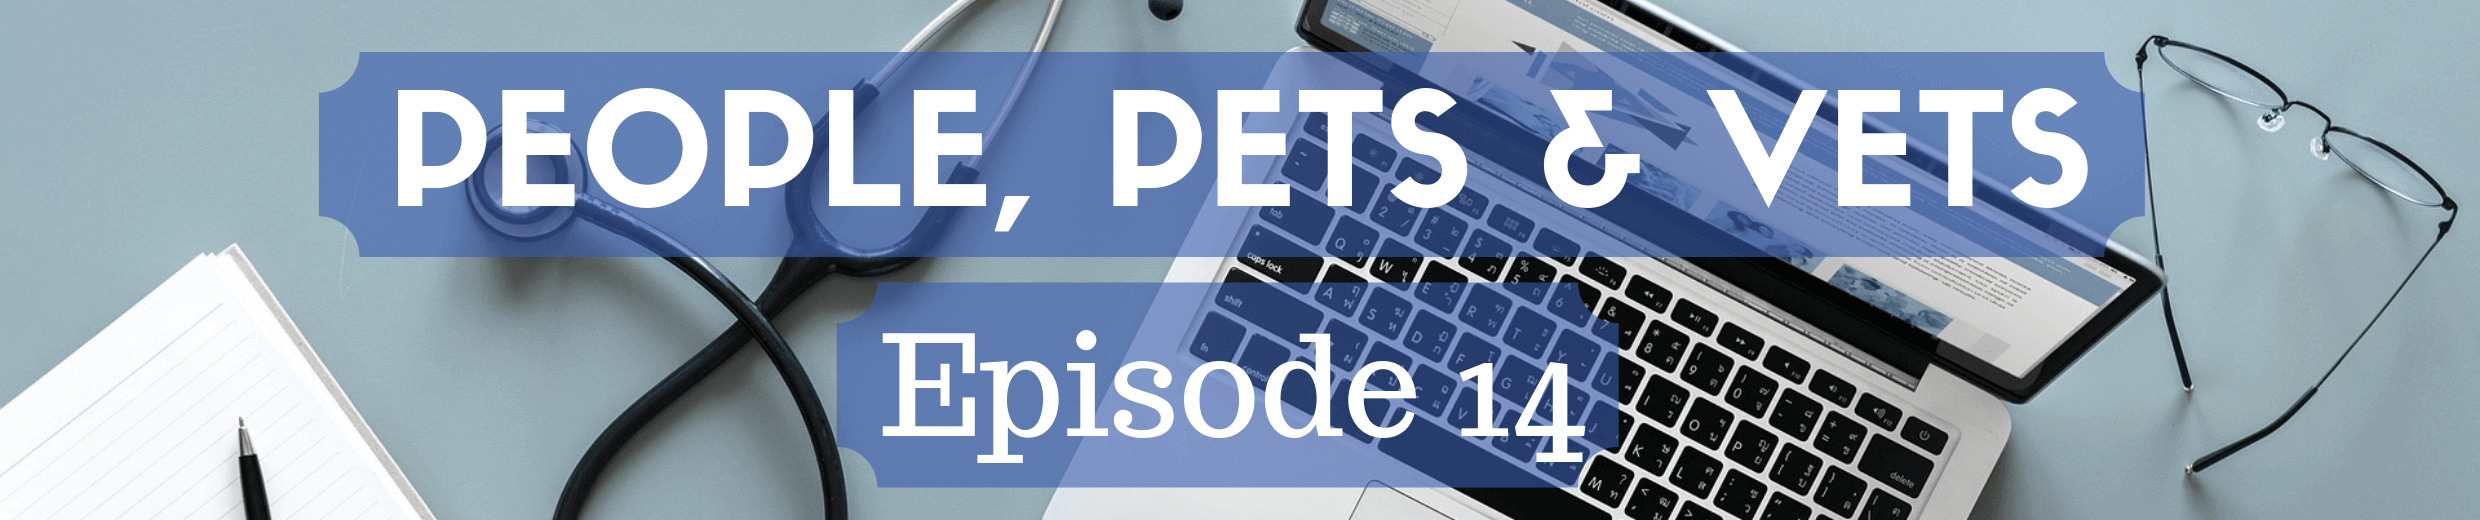 People, Pets & Vets: Episode 14